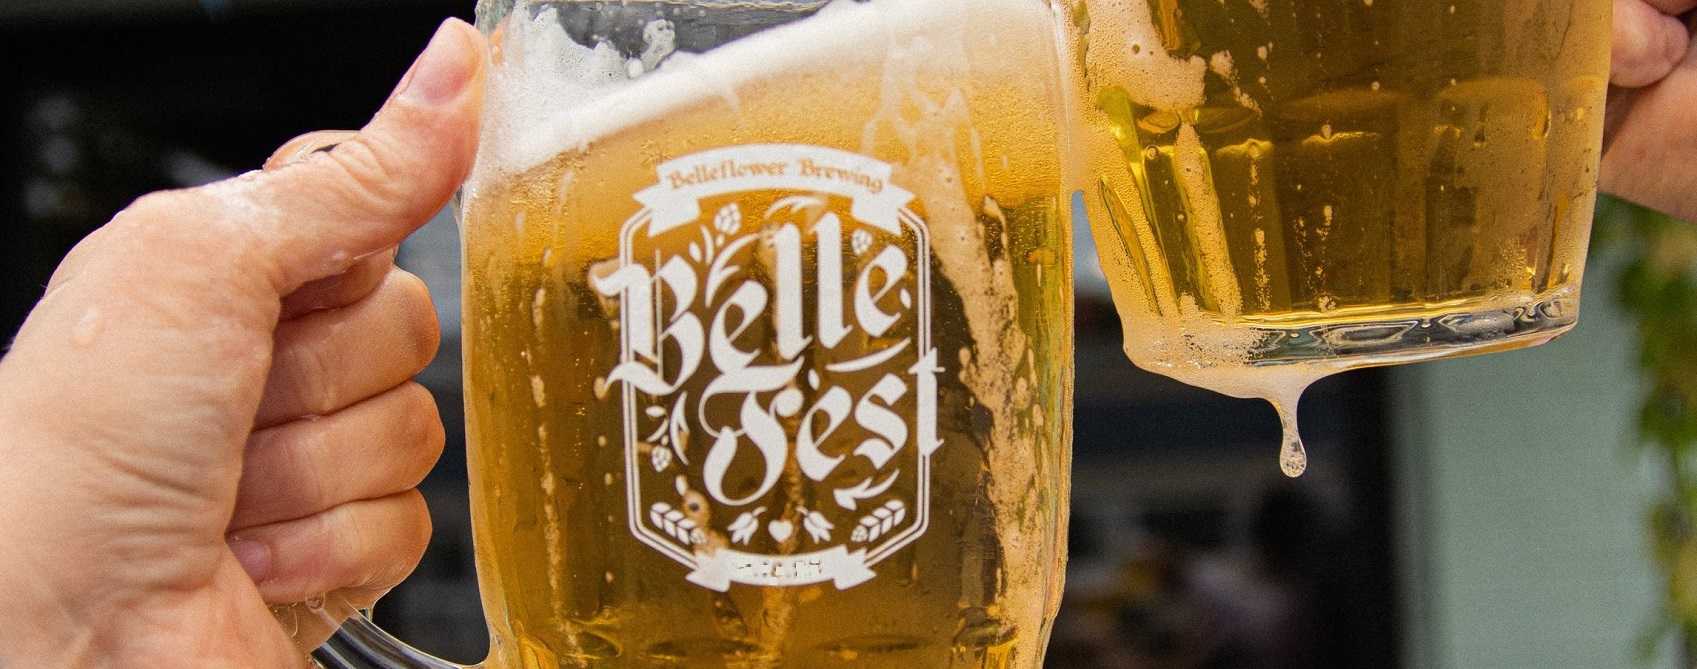 Bellefest at Belleflower Brewing Company banner image